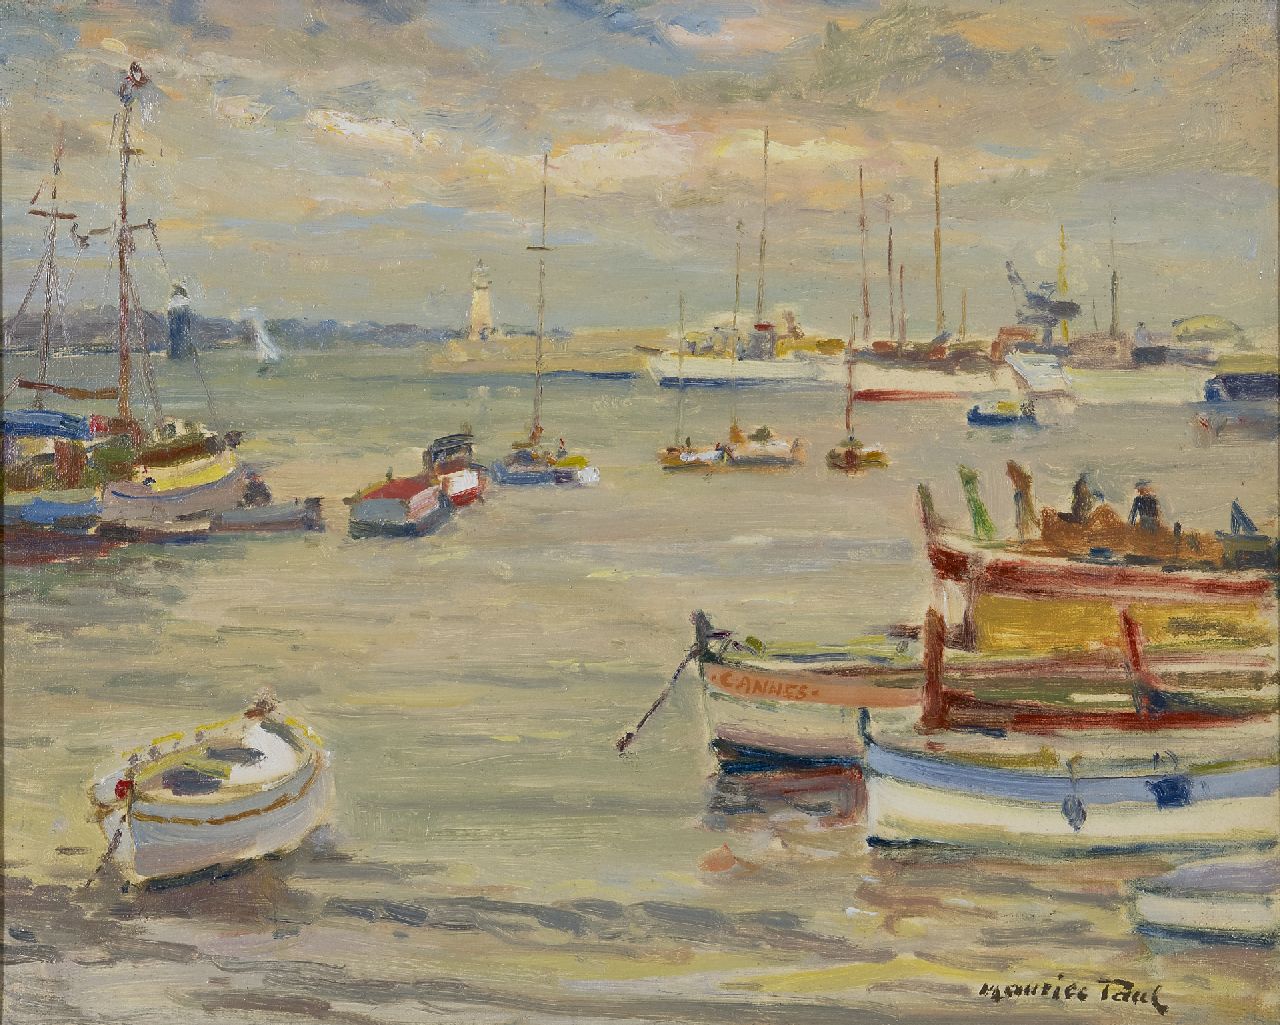 Paul M.  | Maurice Paul, Cannes, olieverf op doek 33,6 x 41,3 cm, gesigneerd rechtsonder